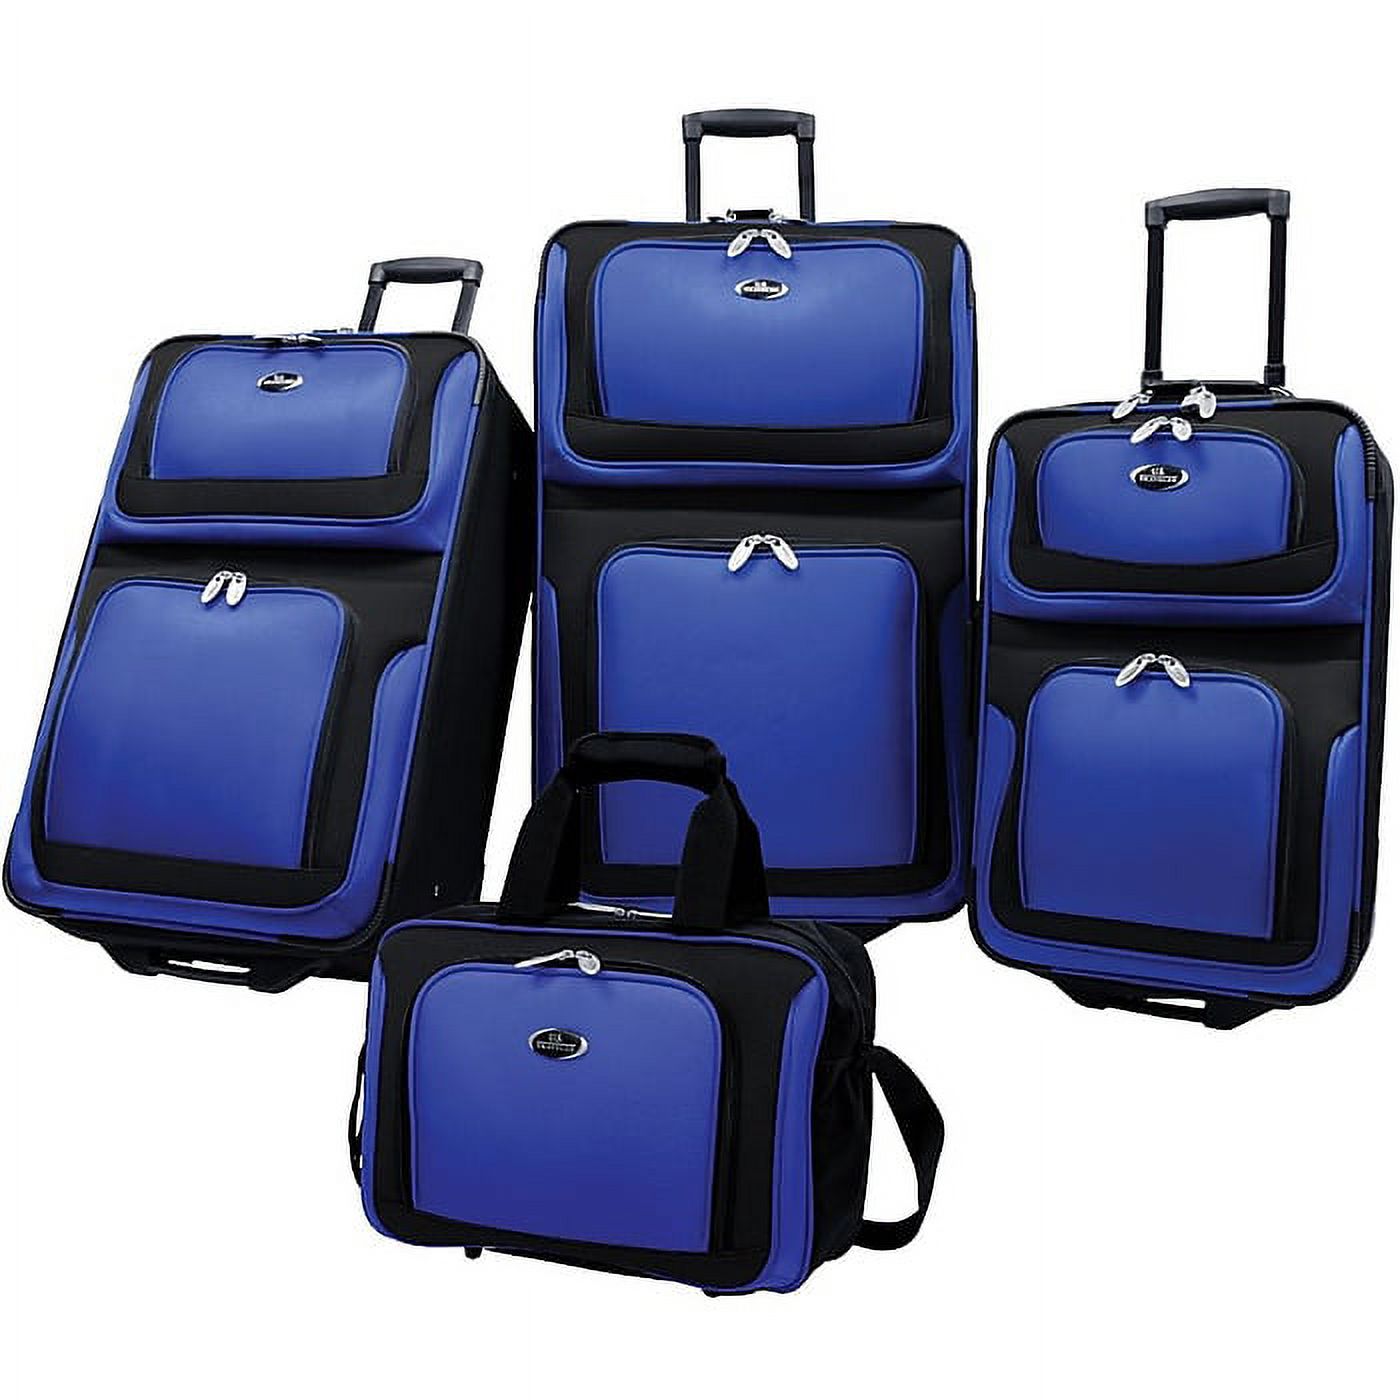 U.S. Traveler New Yorker 4-Piece Luggage Set - image 1 of 7